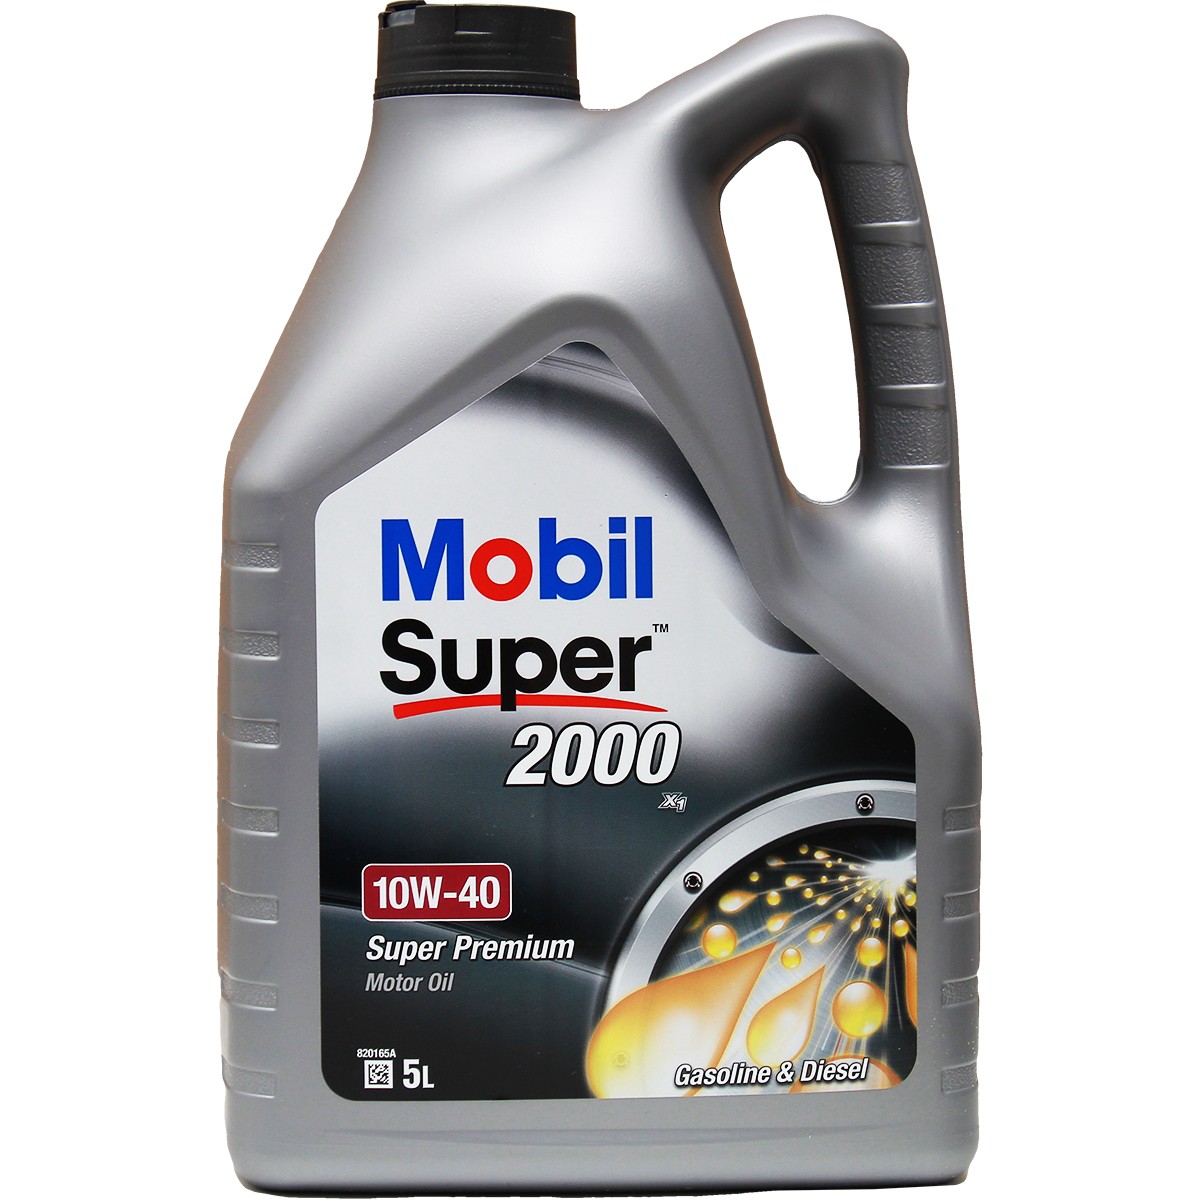 Car oil VW 501 01 MOBIL diesel - 150563 Super, 2000 X1